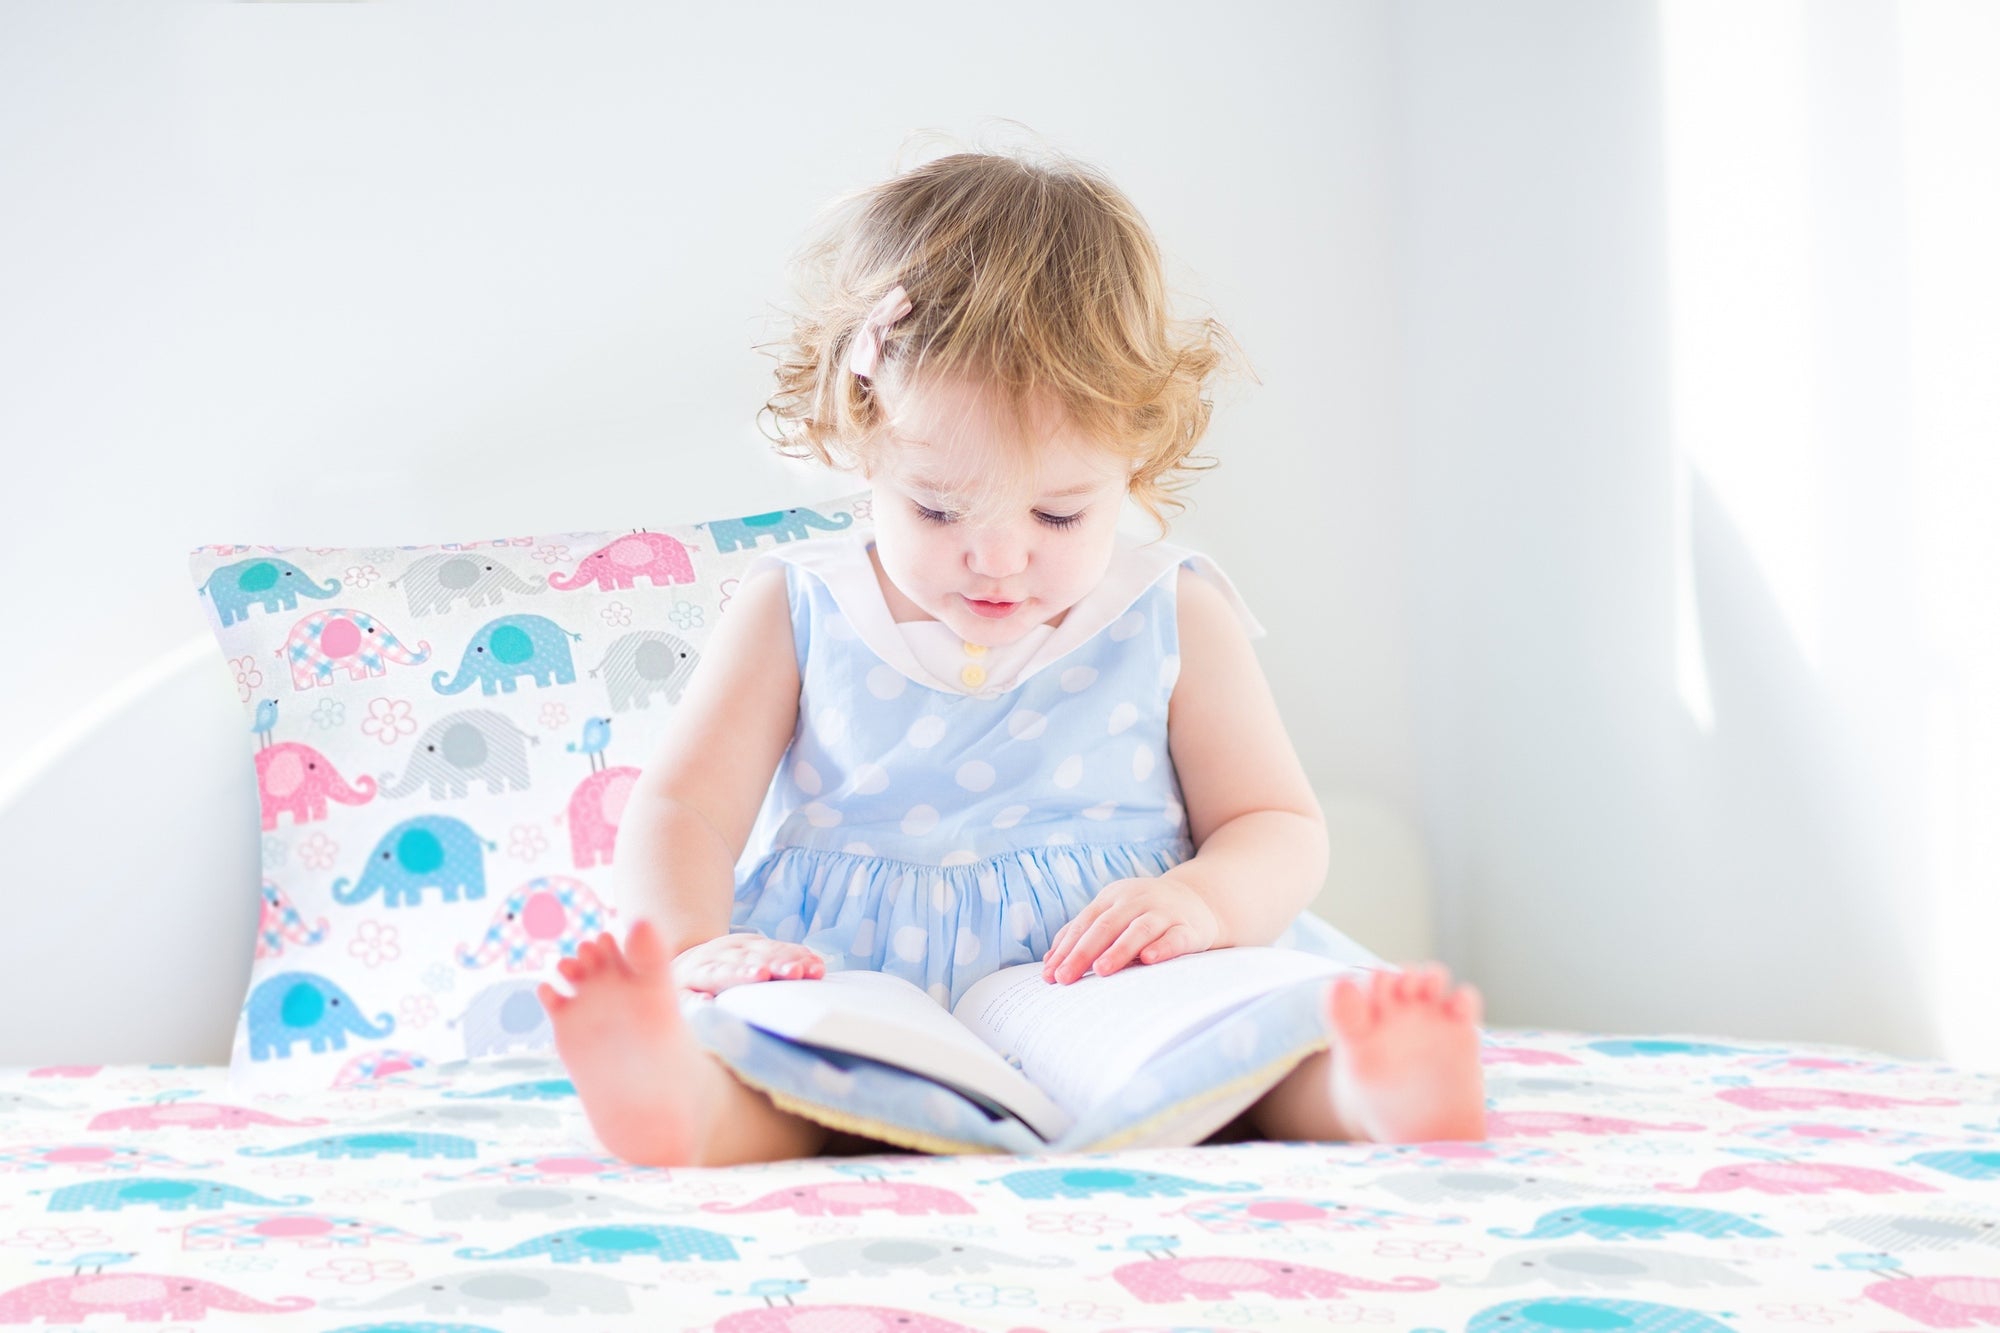 Crib Sheet + Toddler Pillowcase | Elephants